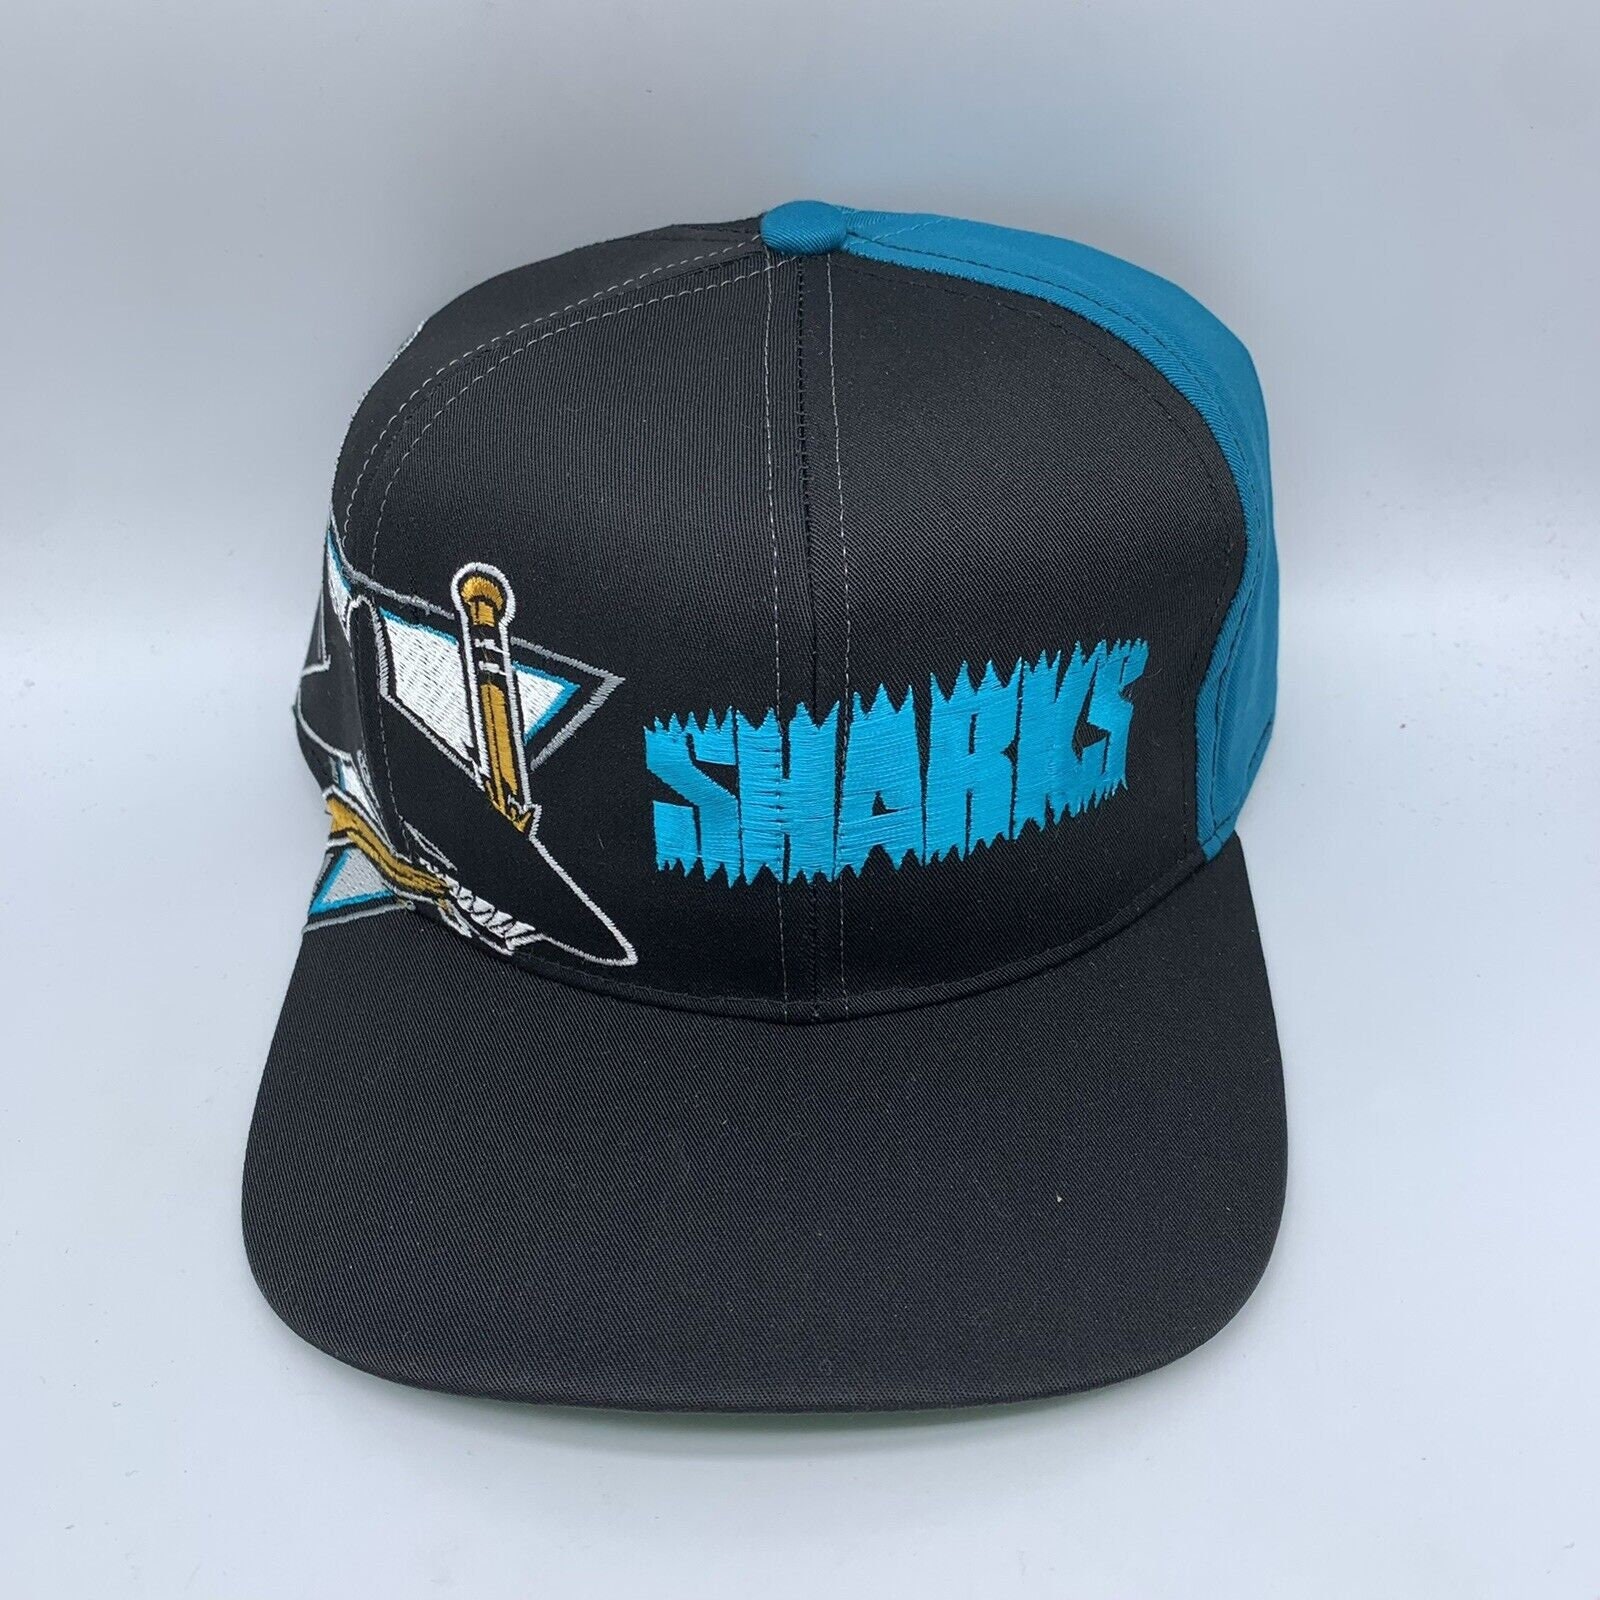 THE TANK San Jose Sharks Hat (Grey, Corduroy, Vintage) – A5 AESTHETIC LLC